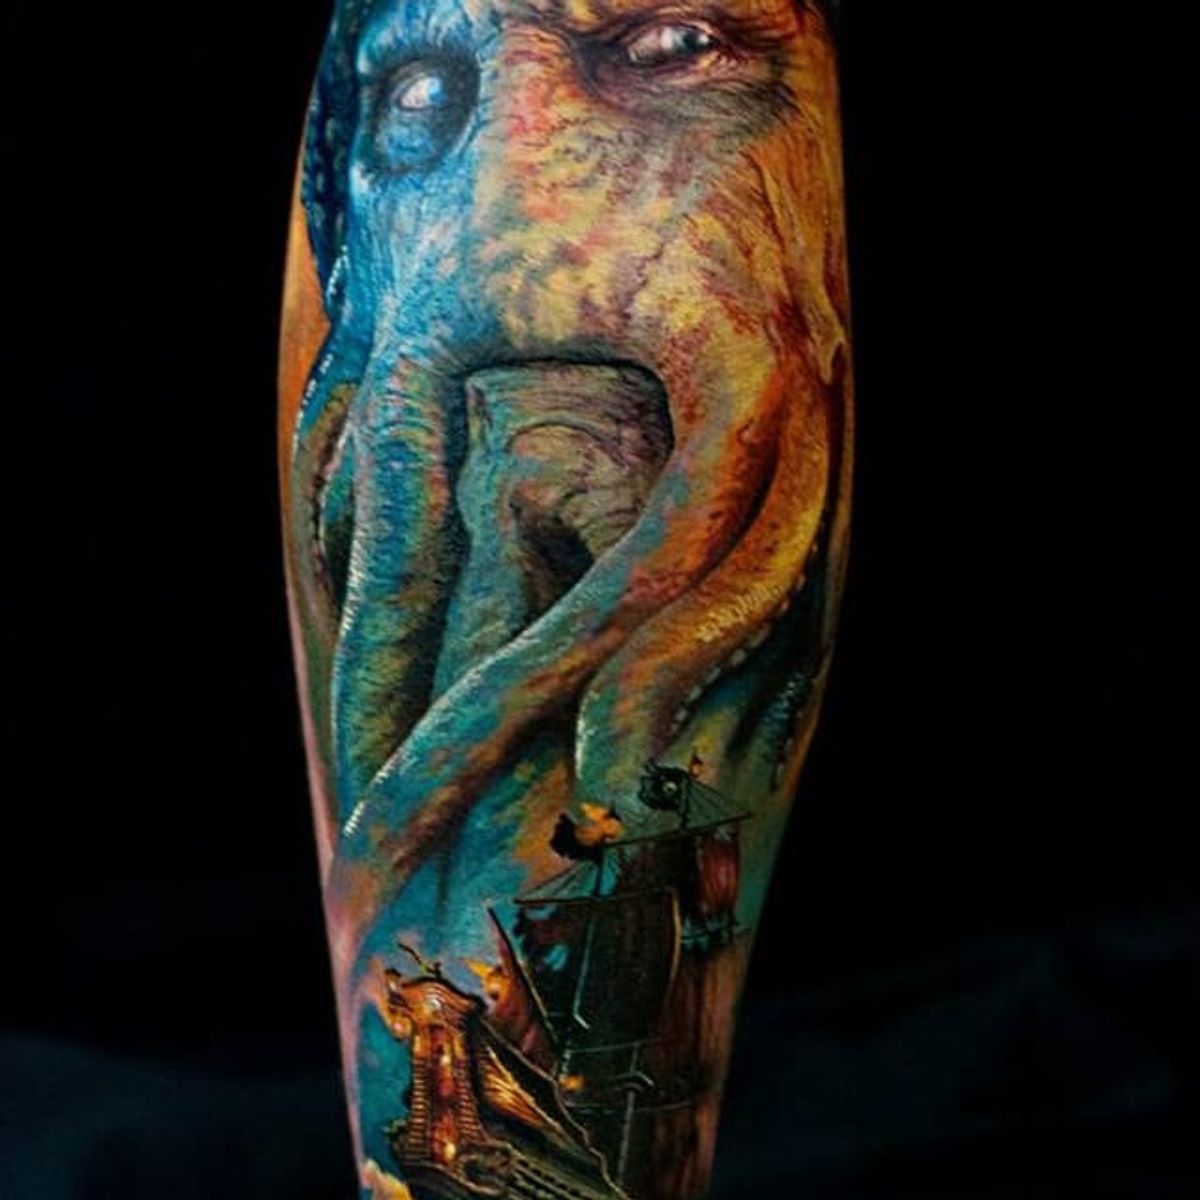 Tattoo uploaded by Filipe Lopes • Tatuagem feita pelo artista ...